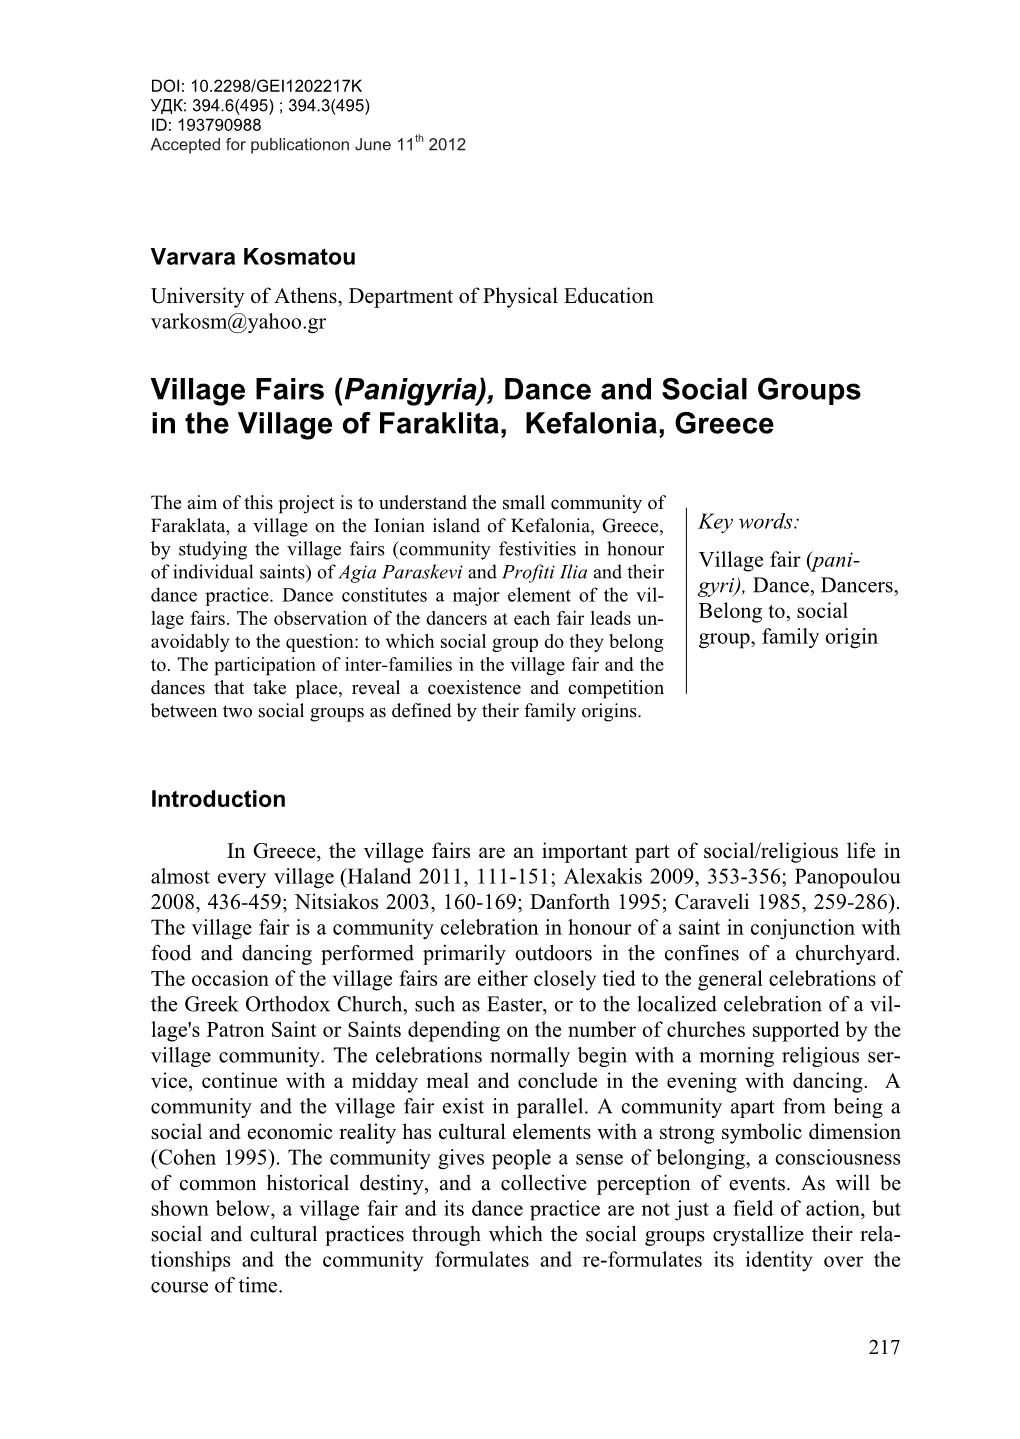 Dance and Social Groups in the Village of Faraklita, Kefalonia, Greece